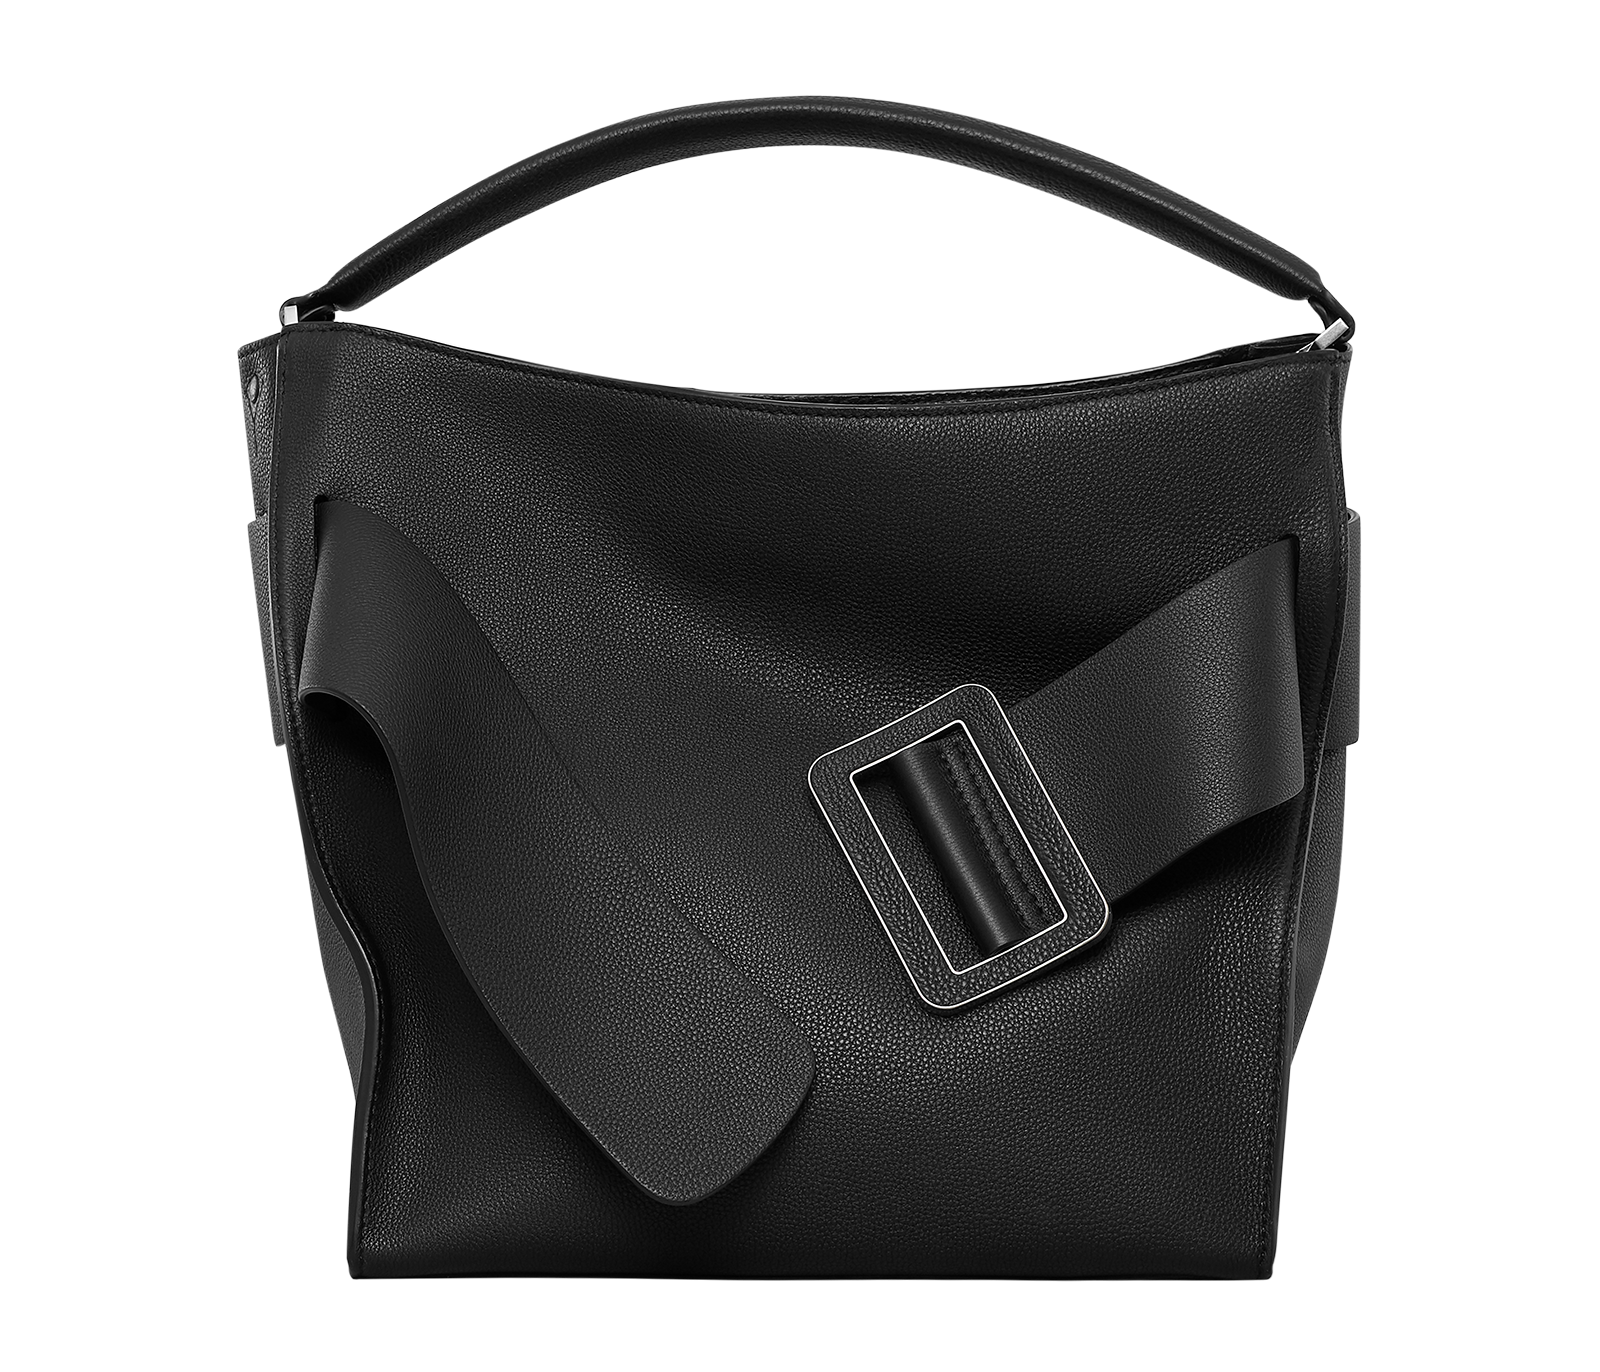 Sam Edelman Devon Shoulder Bag, Black: Handbags: Amazon.com